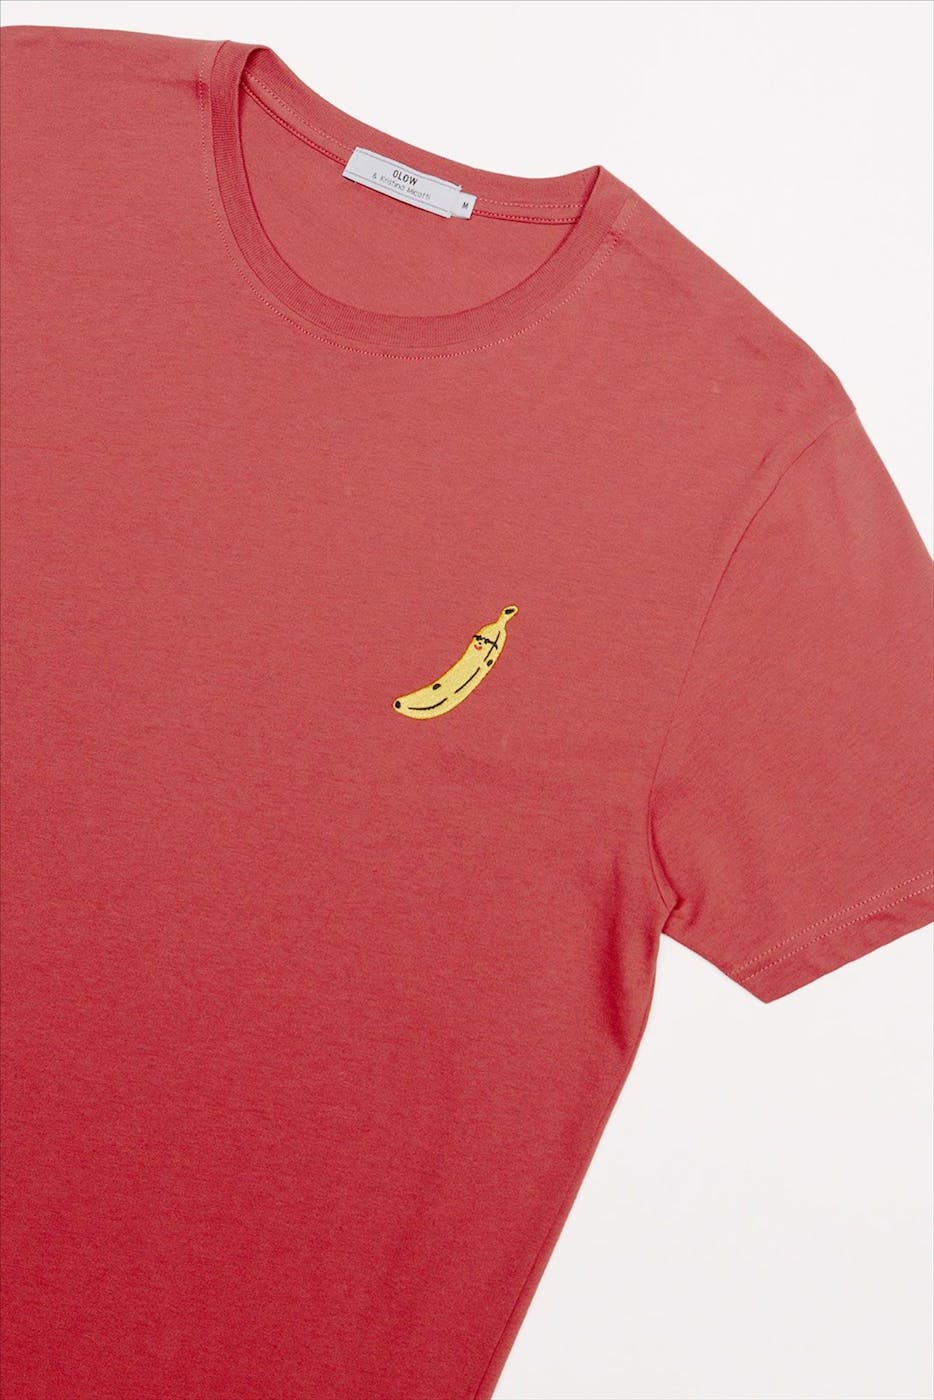 OLOW - Roestbruine Banana Chill T-shirt